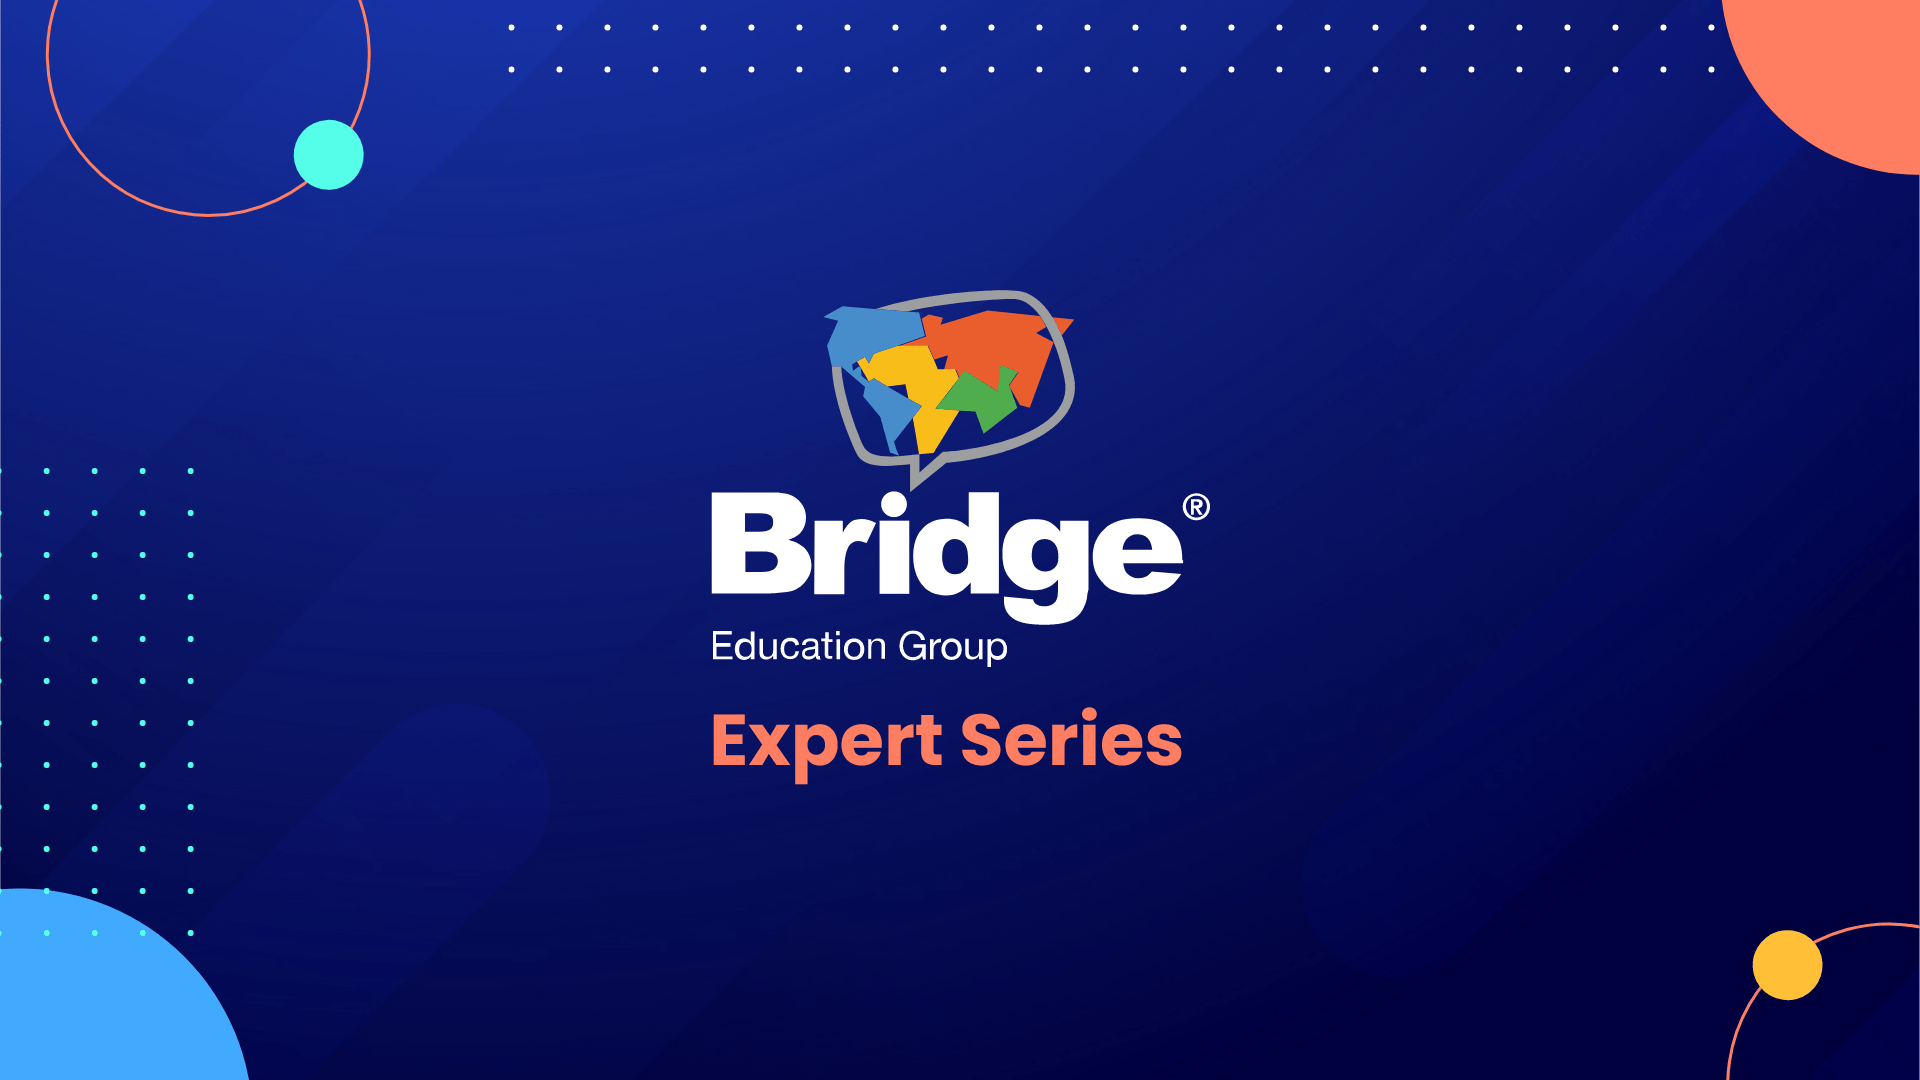 Bridge logo with expert series title